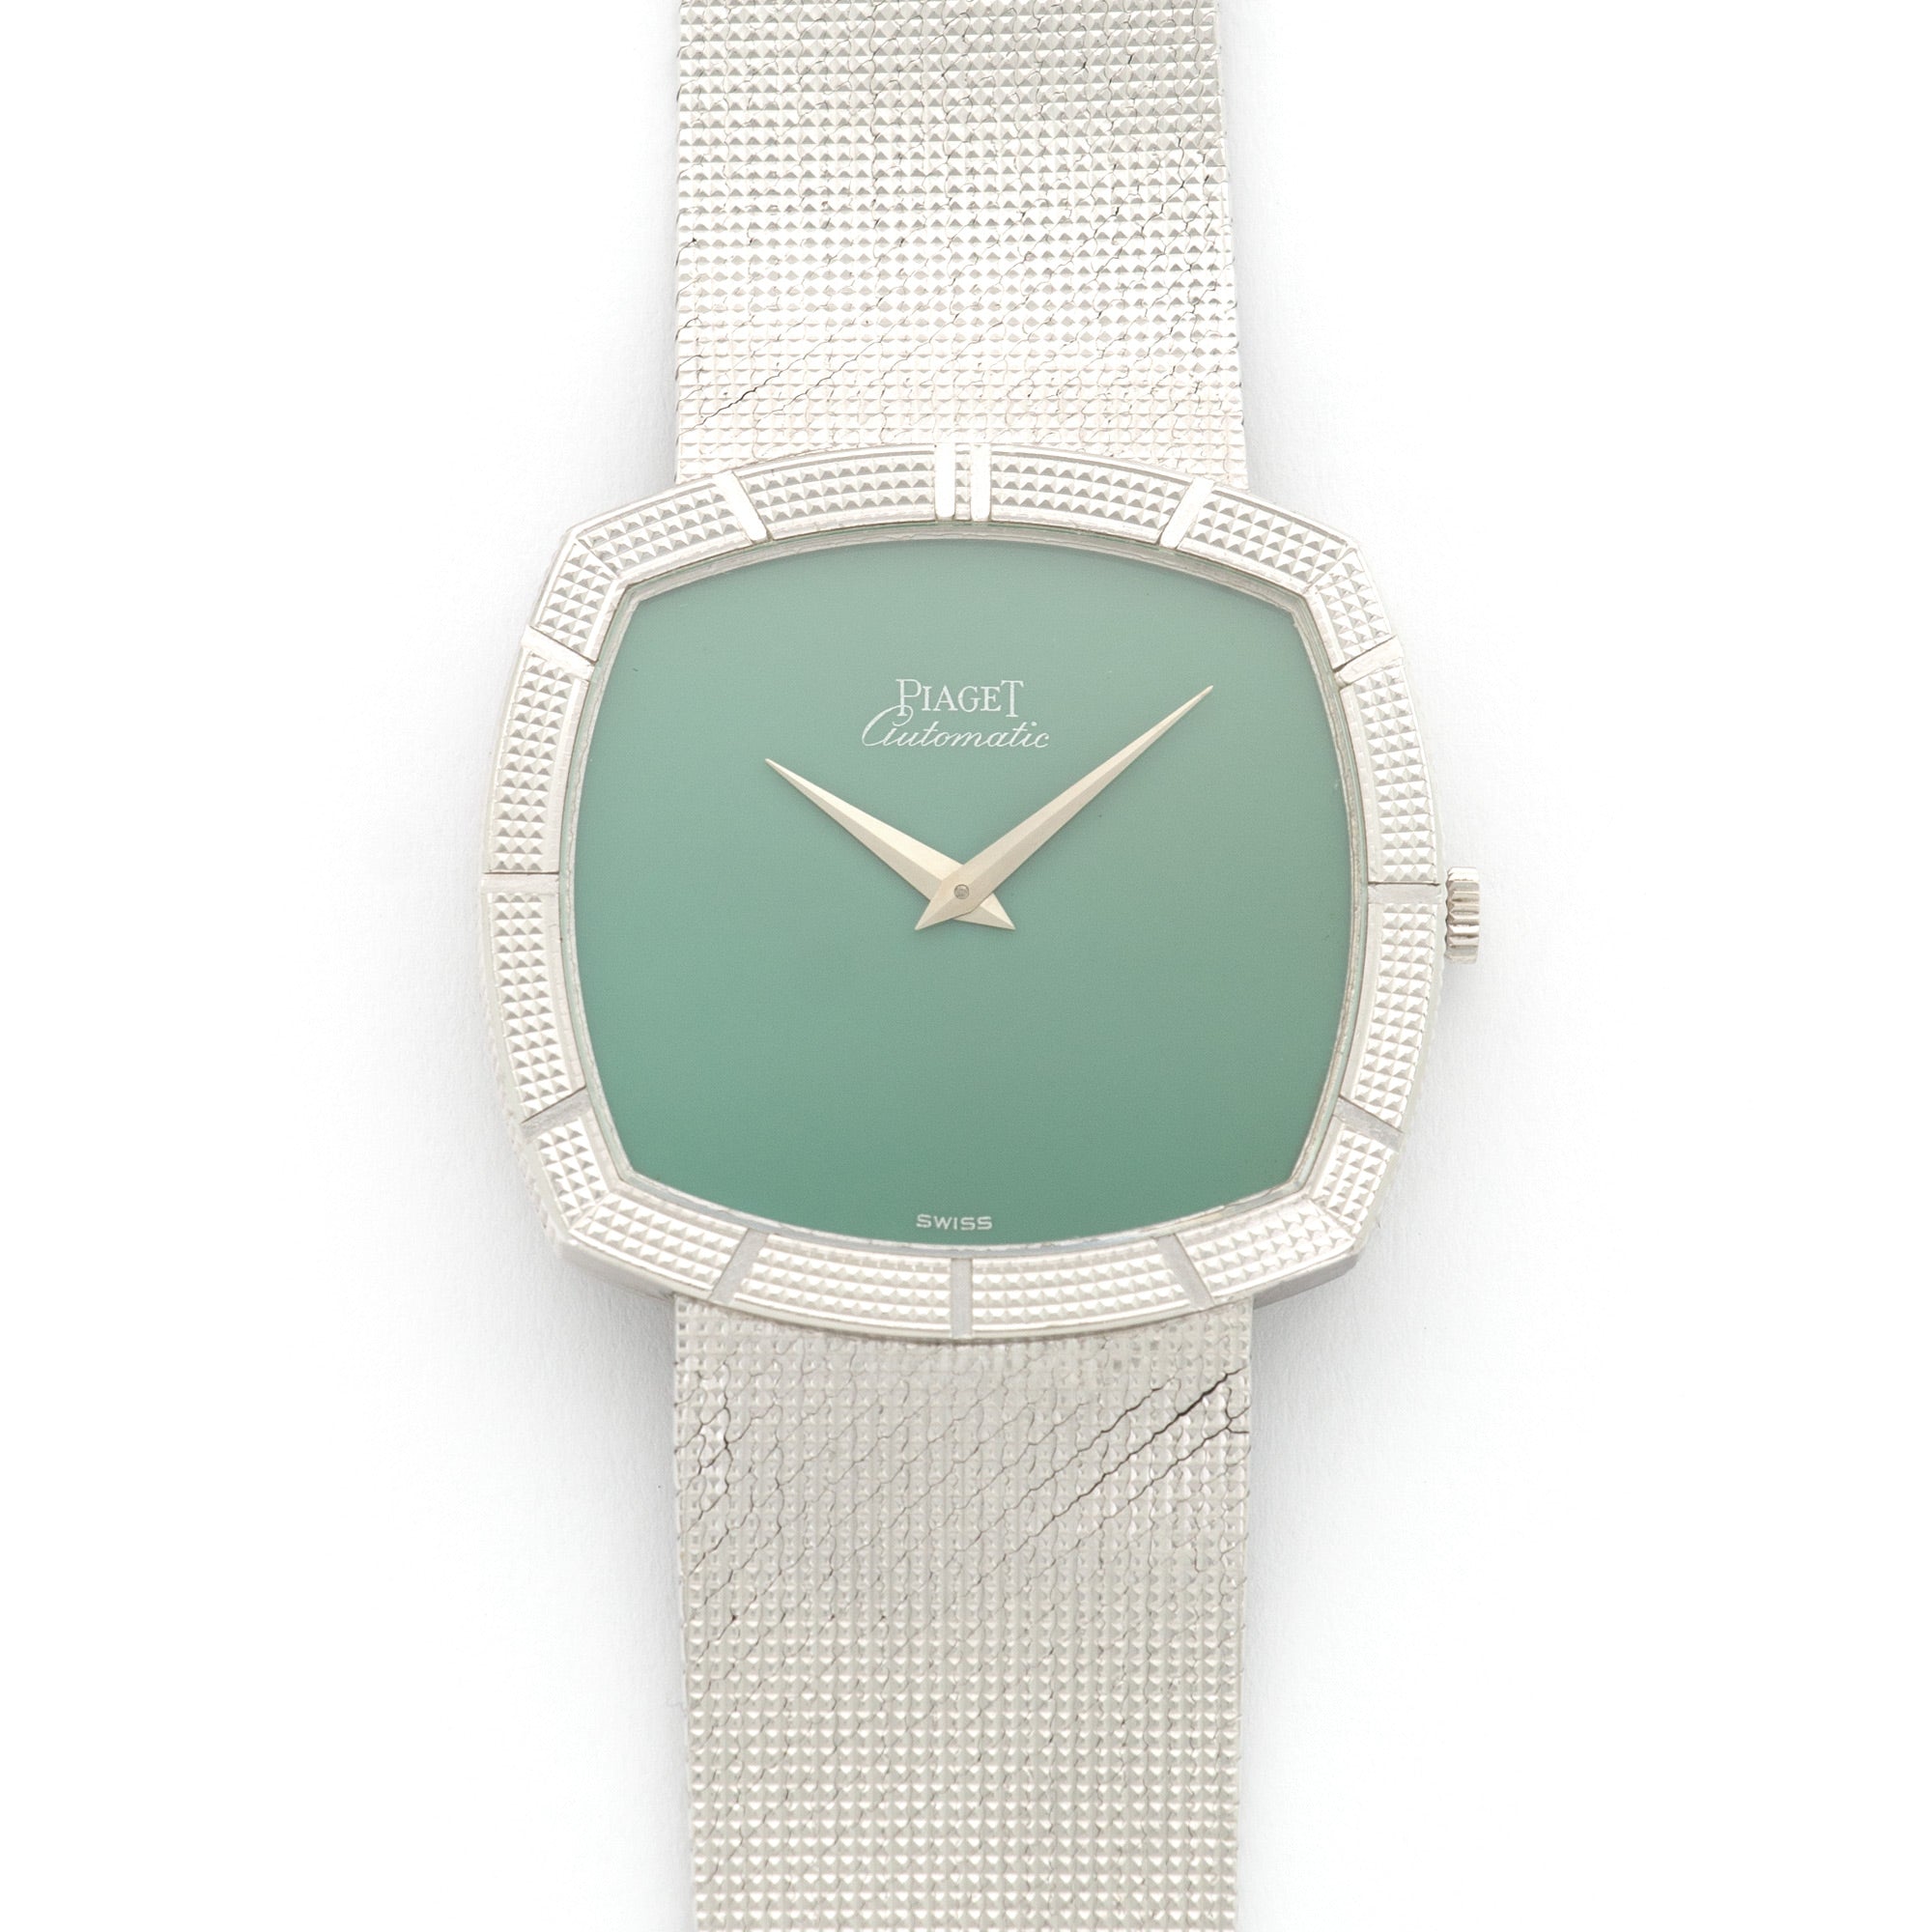 Piaget - Piaget White Gold Bracelet Watch - The Keystone Watches